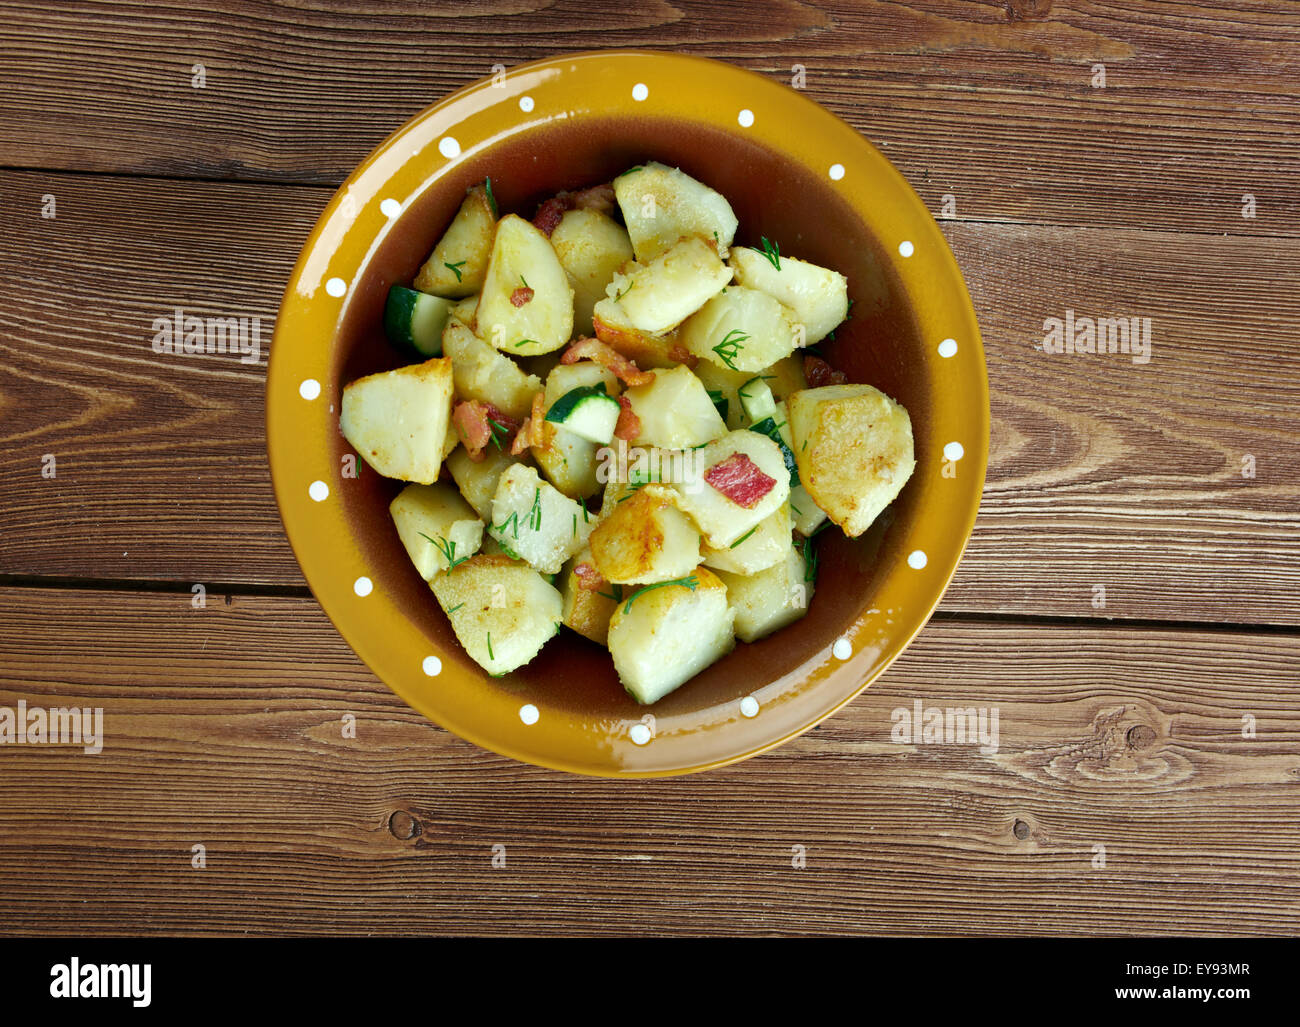 German Potato Salad High Resolution Stock Photography and Images - Alamy